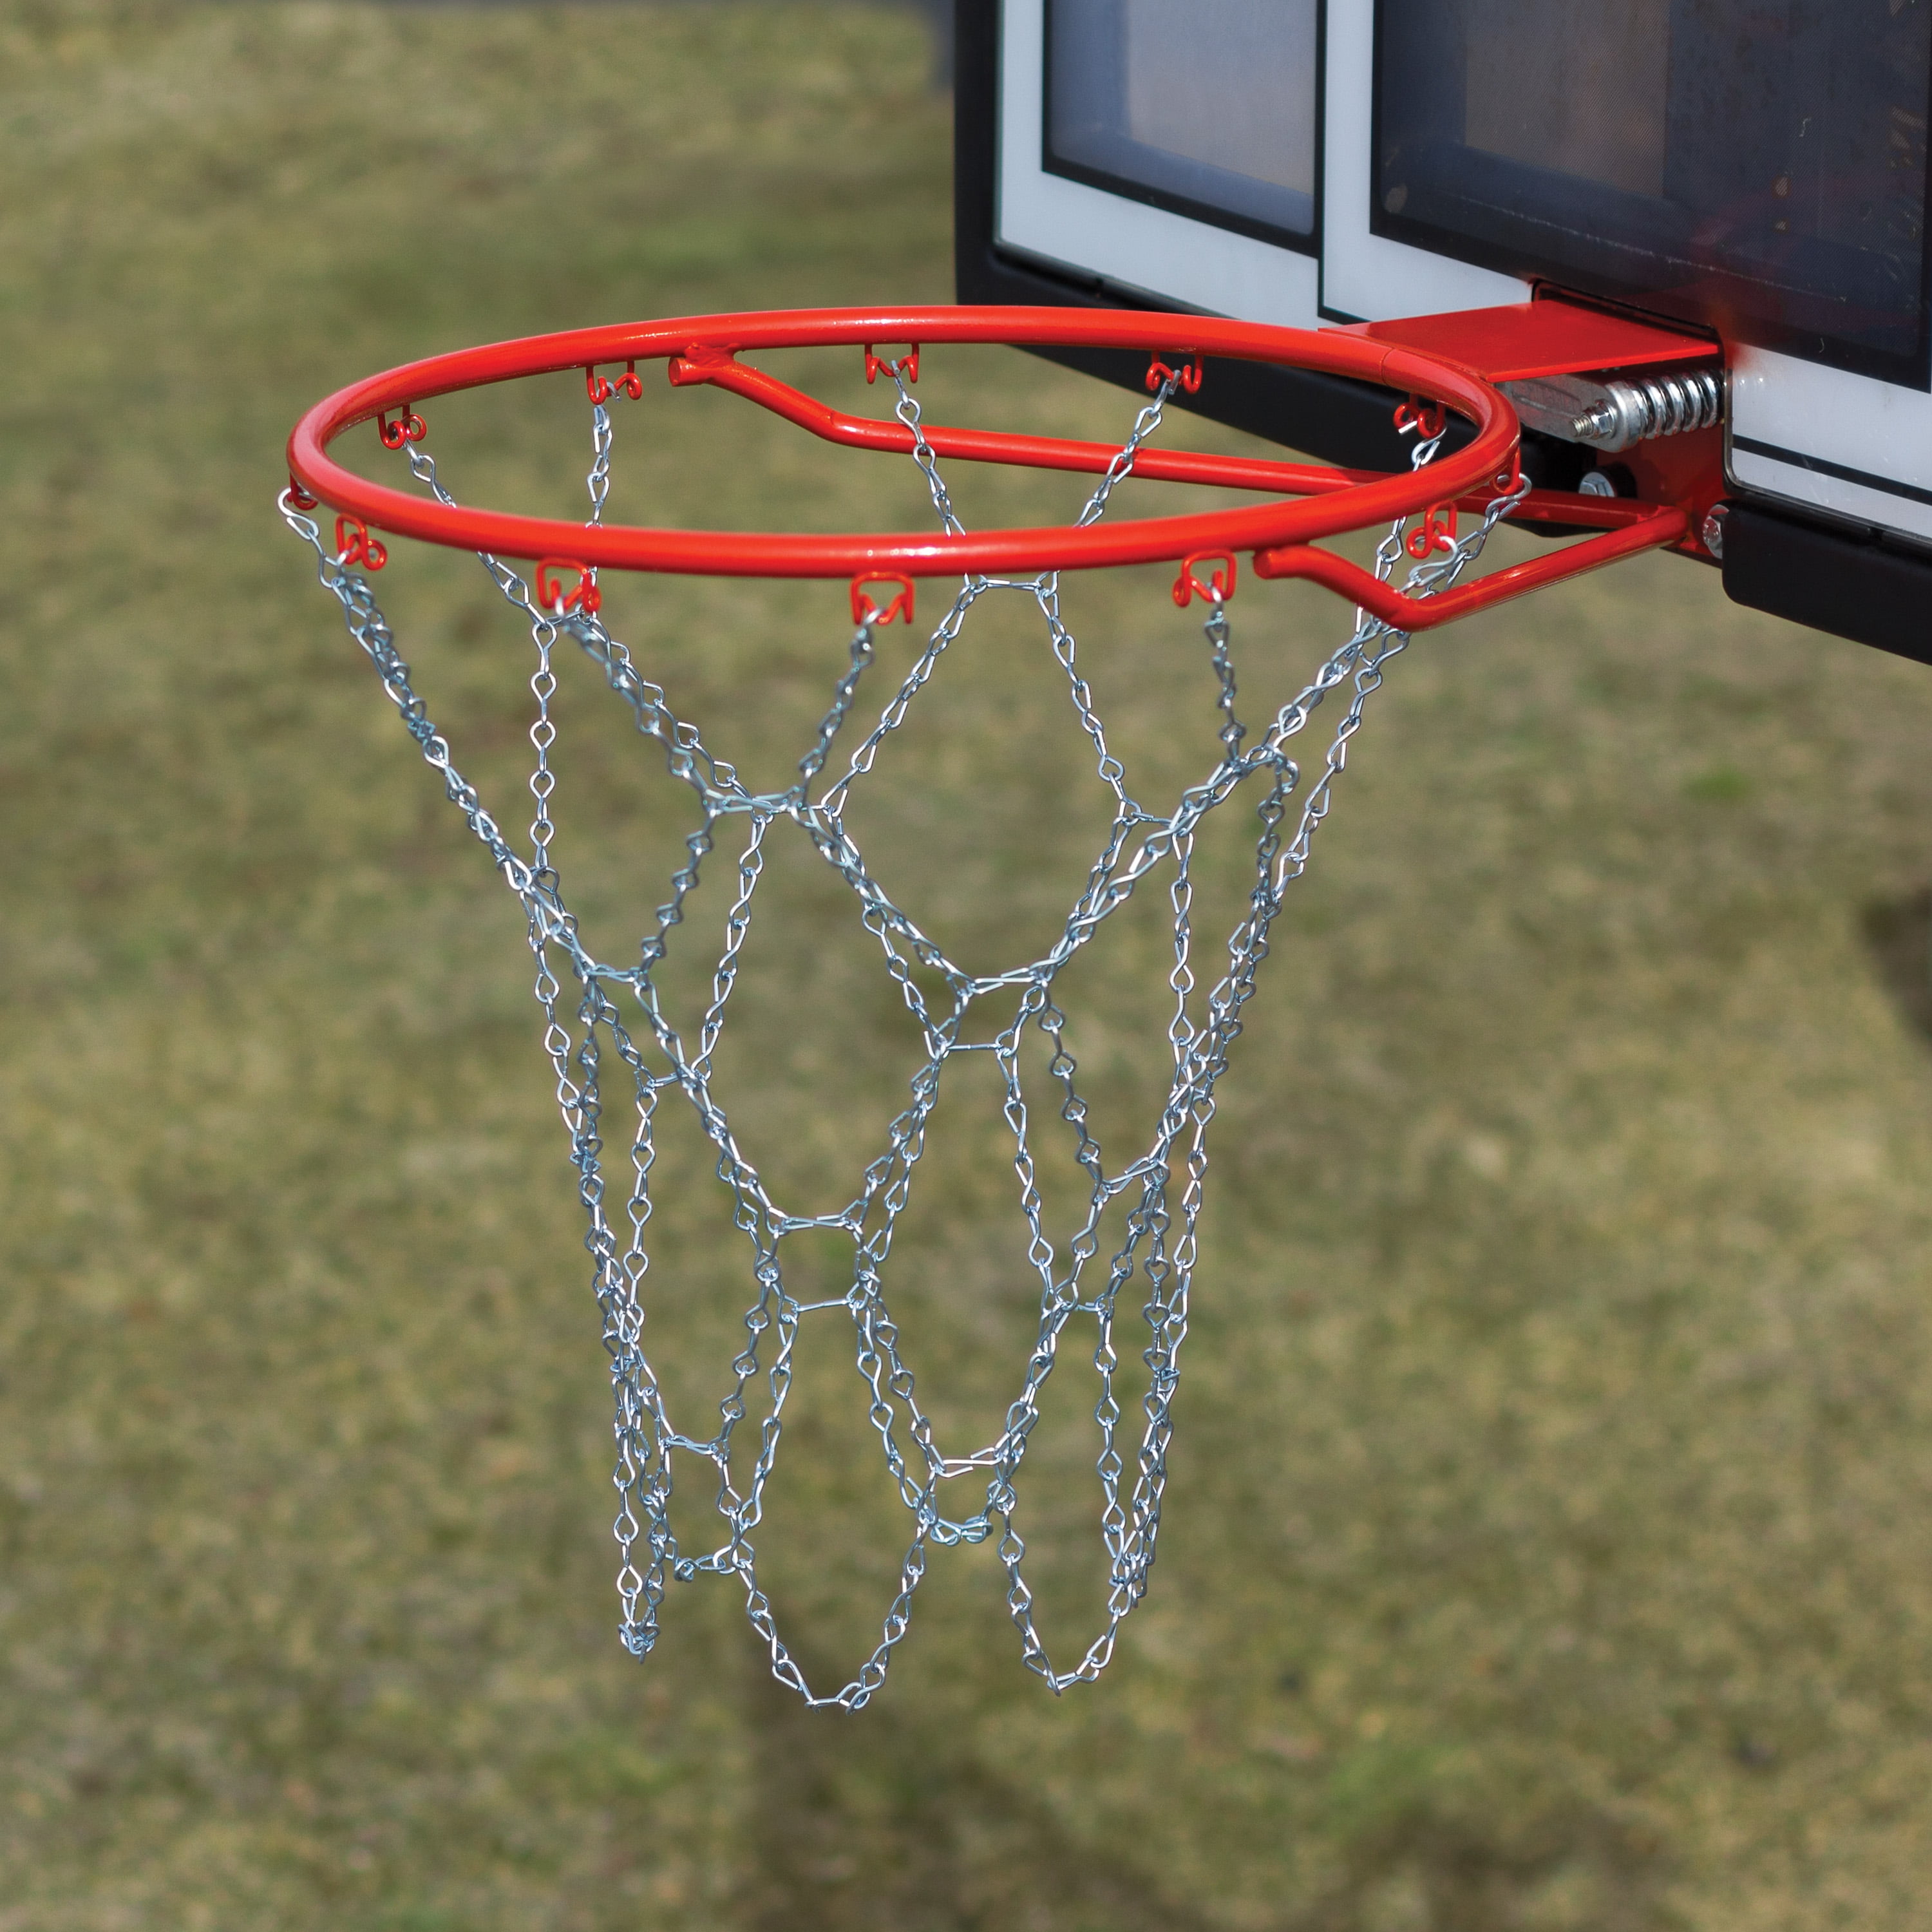 Basketball chain net bright zinc pltd steel 12 gauge chain 